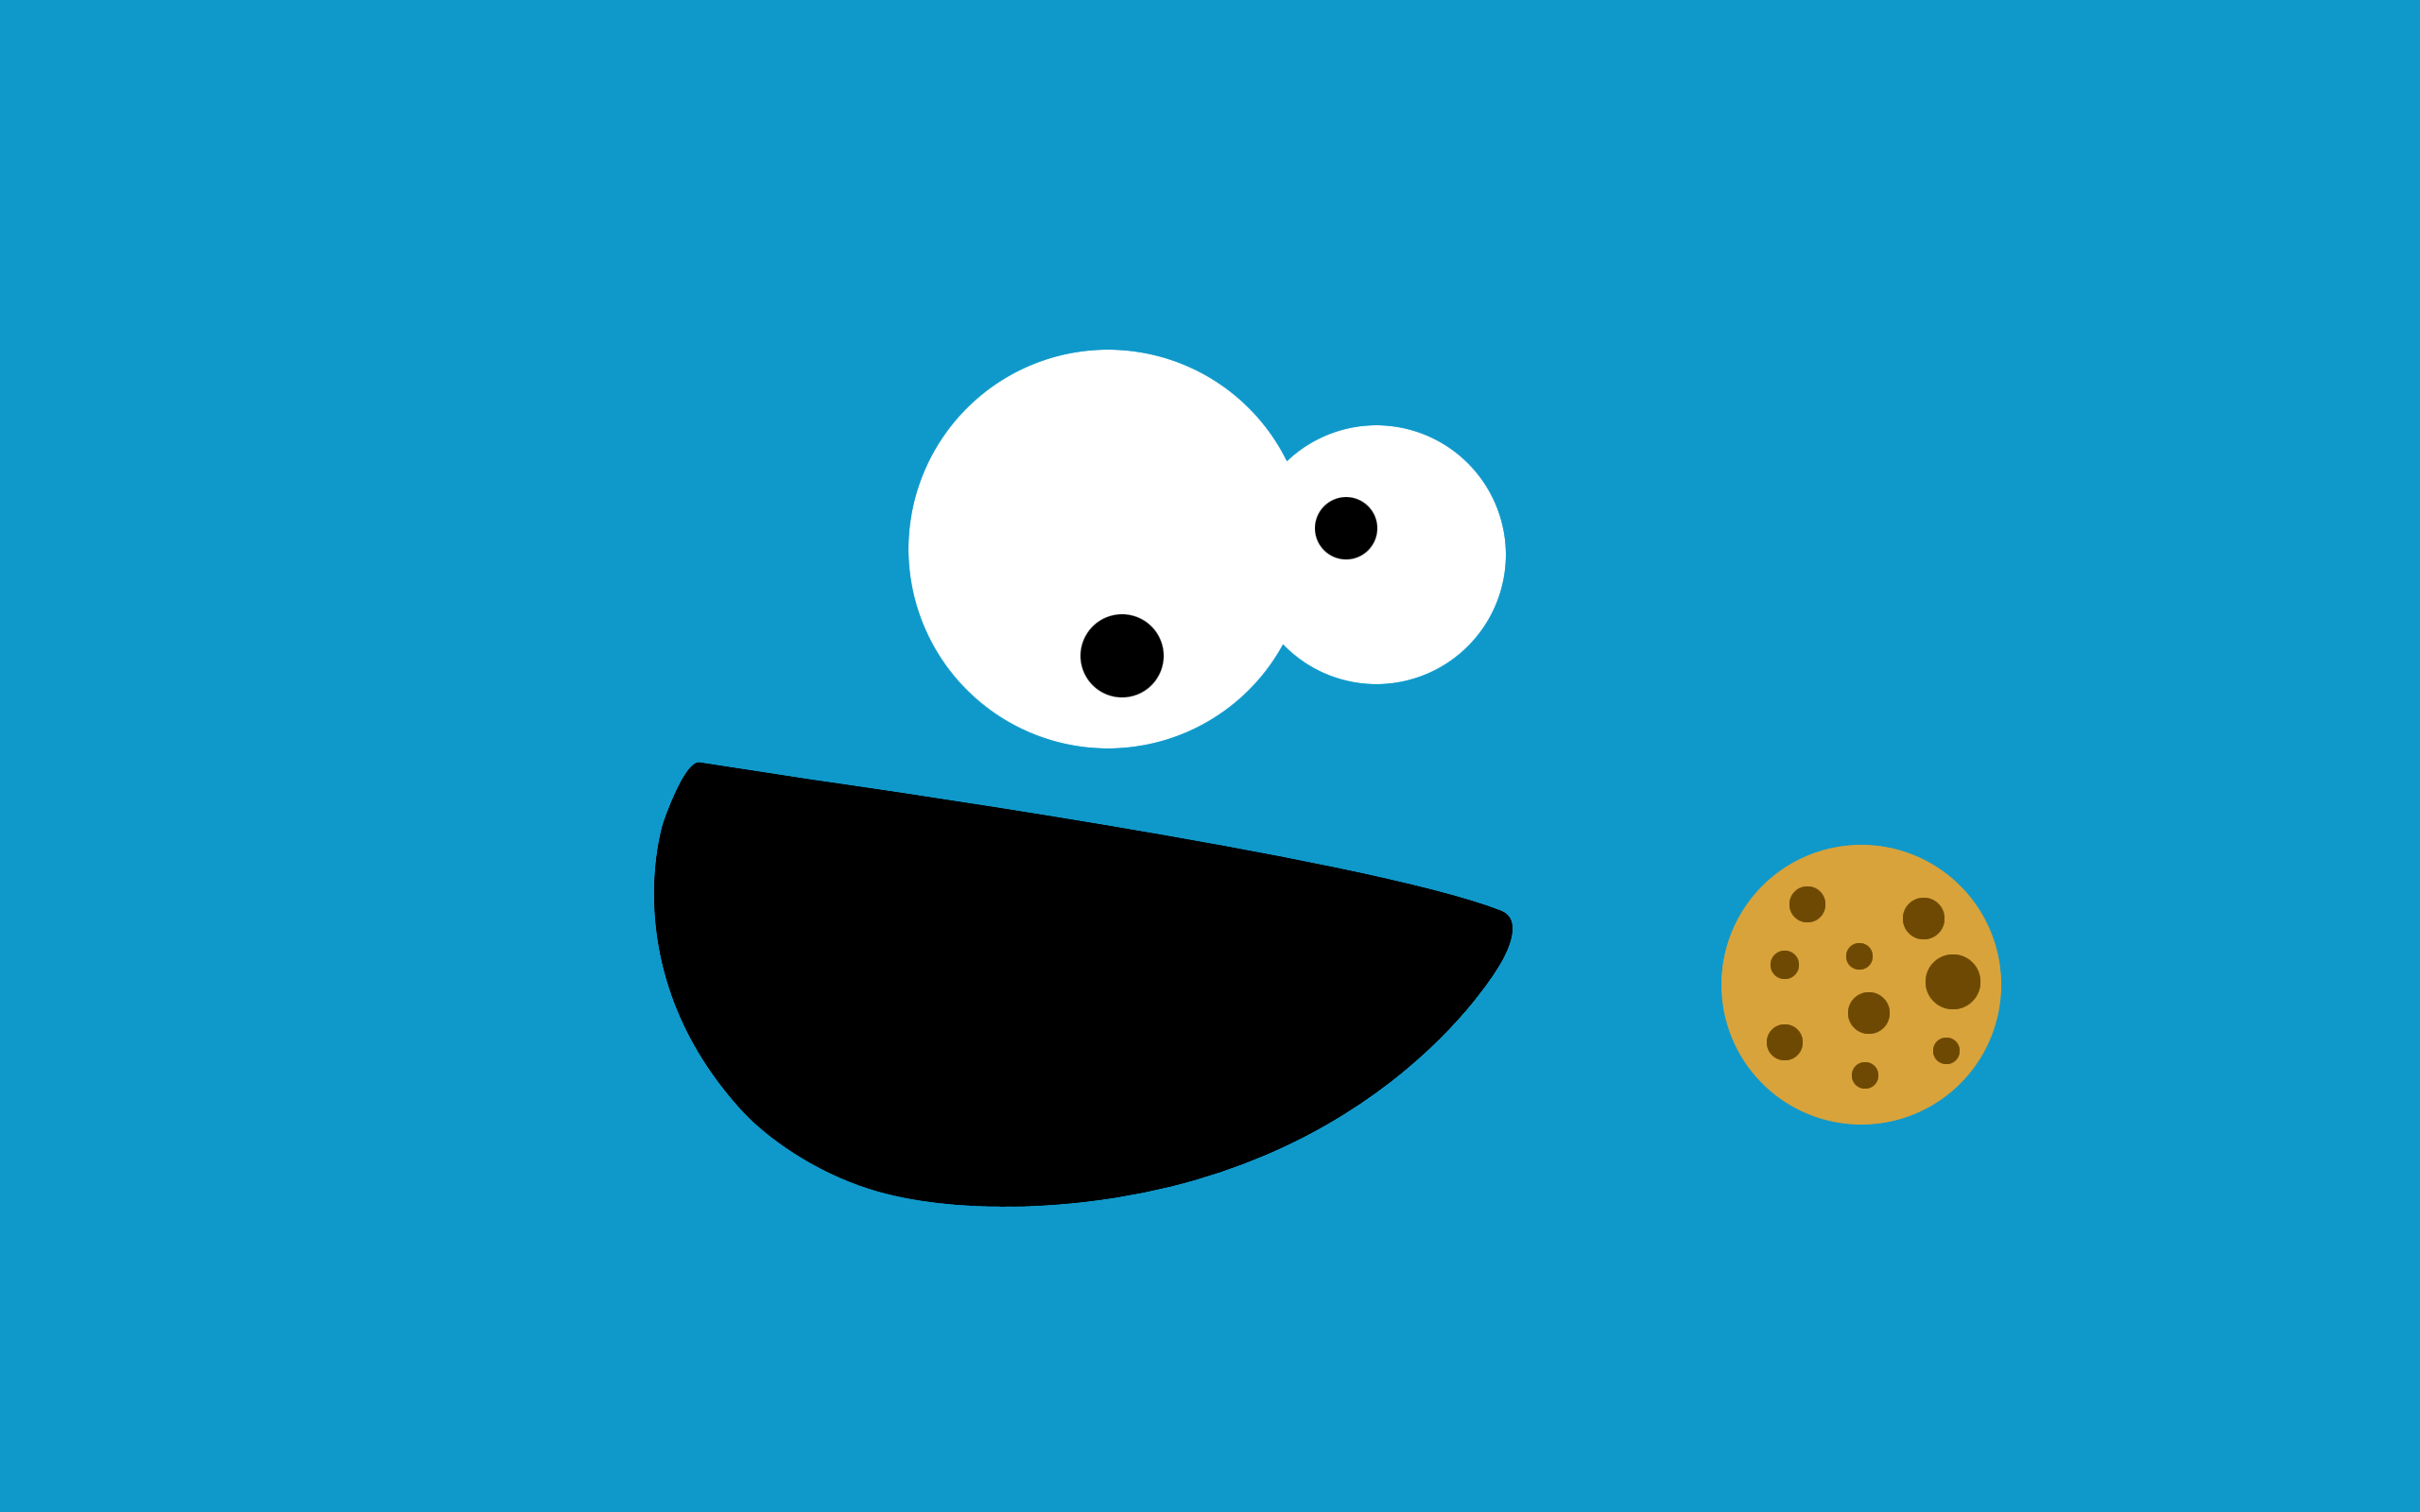 Cookie Monster Wallpaper 16789 2560x1600 px